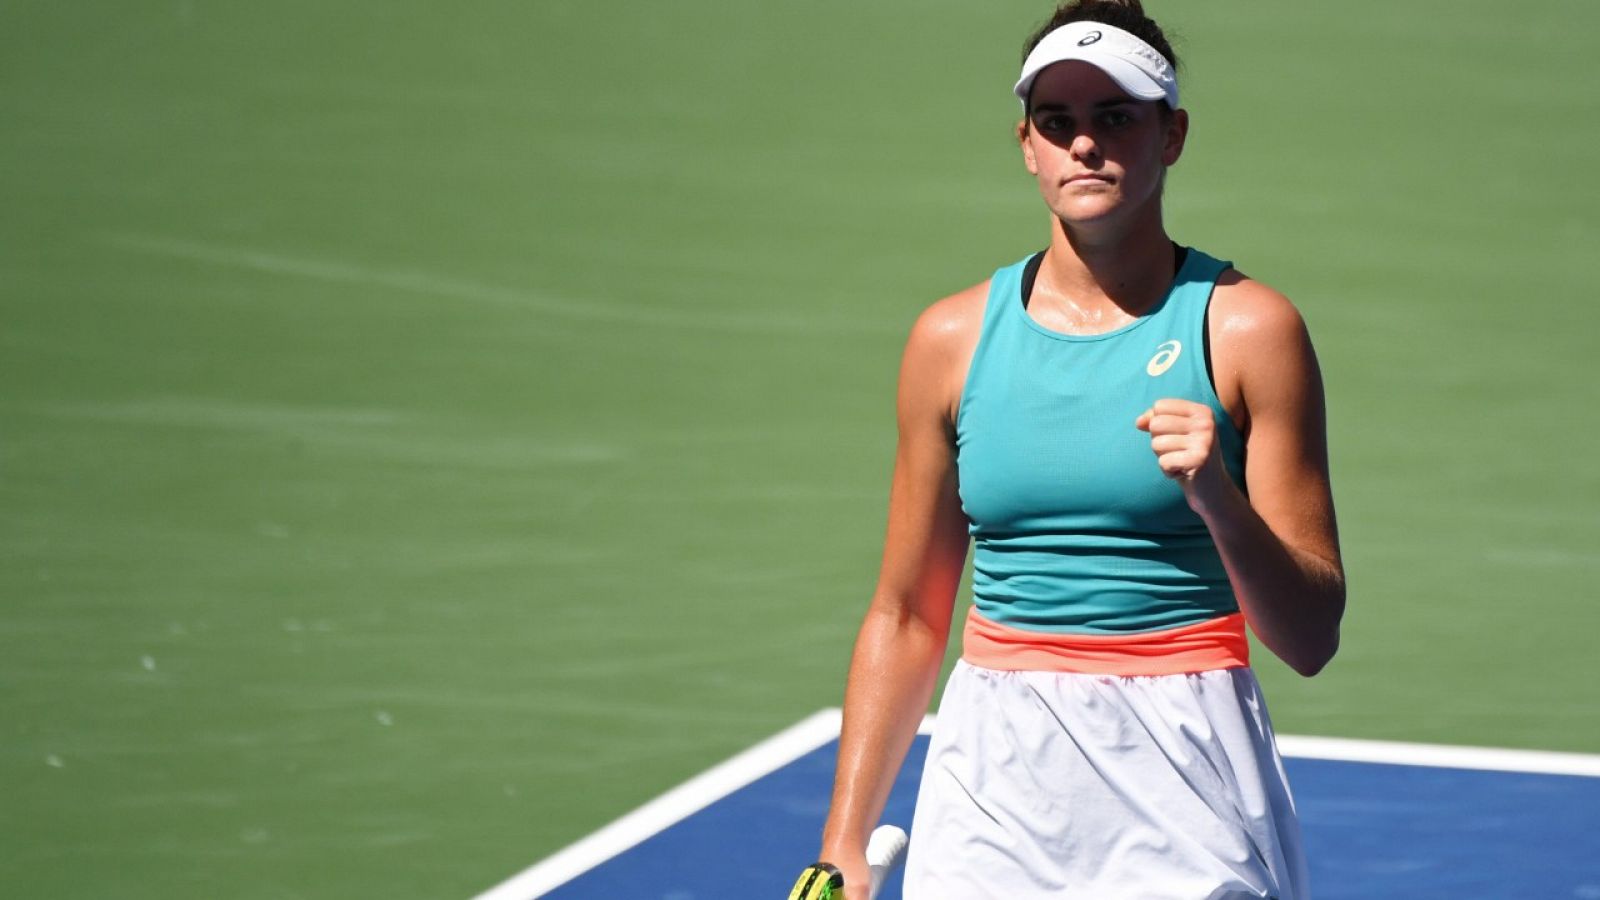 La tenista estadounidense Jennifer Brady celebra su victoria ante Putintseva en el US Open.